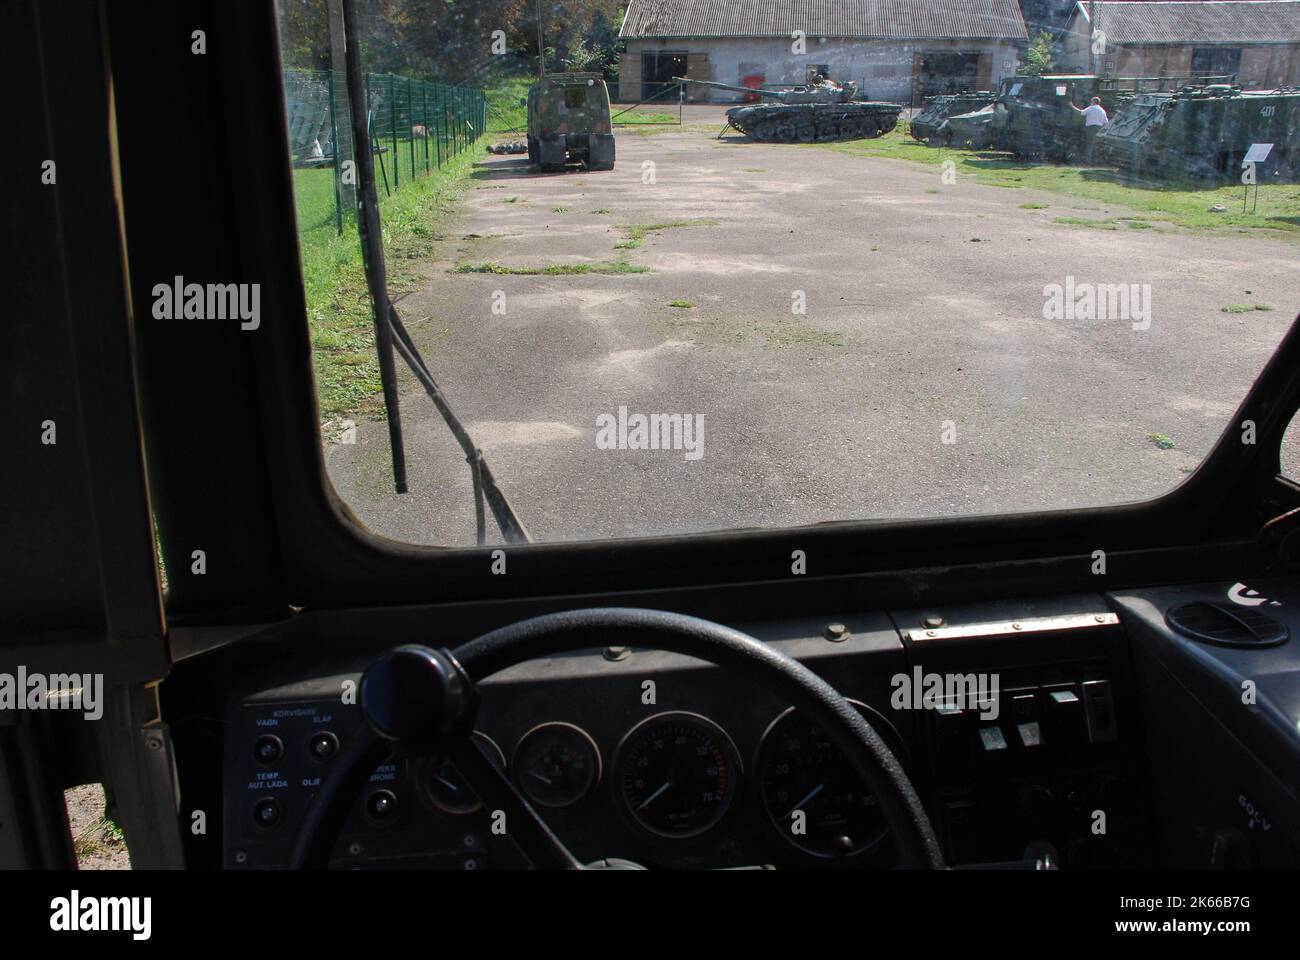 Bandvagn 206 tracked vehicle Stock Photo